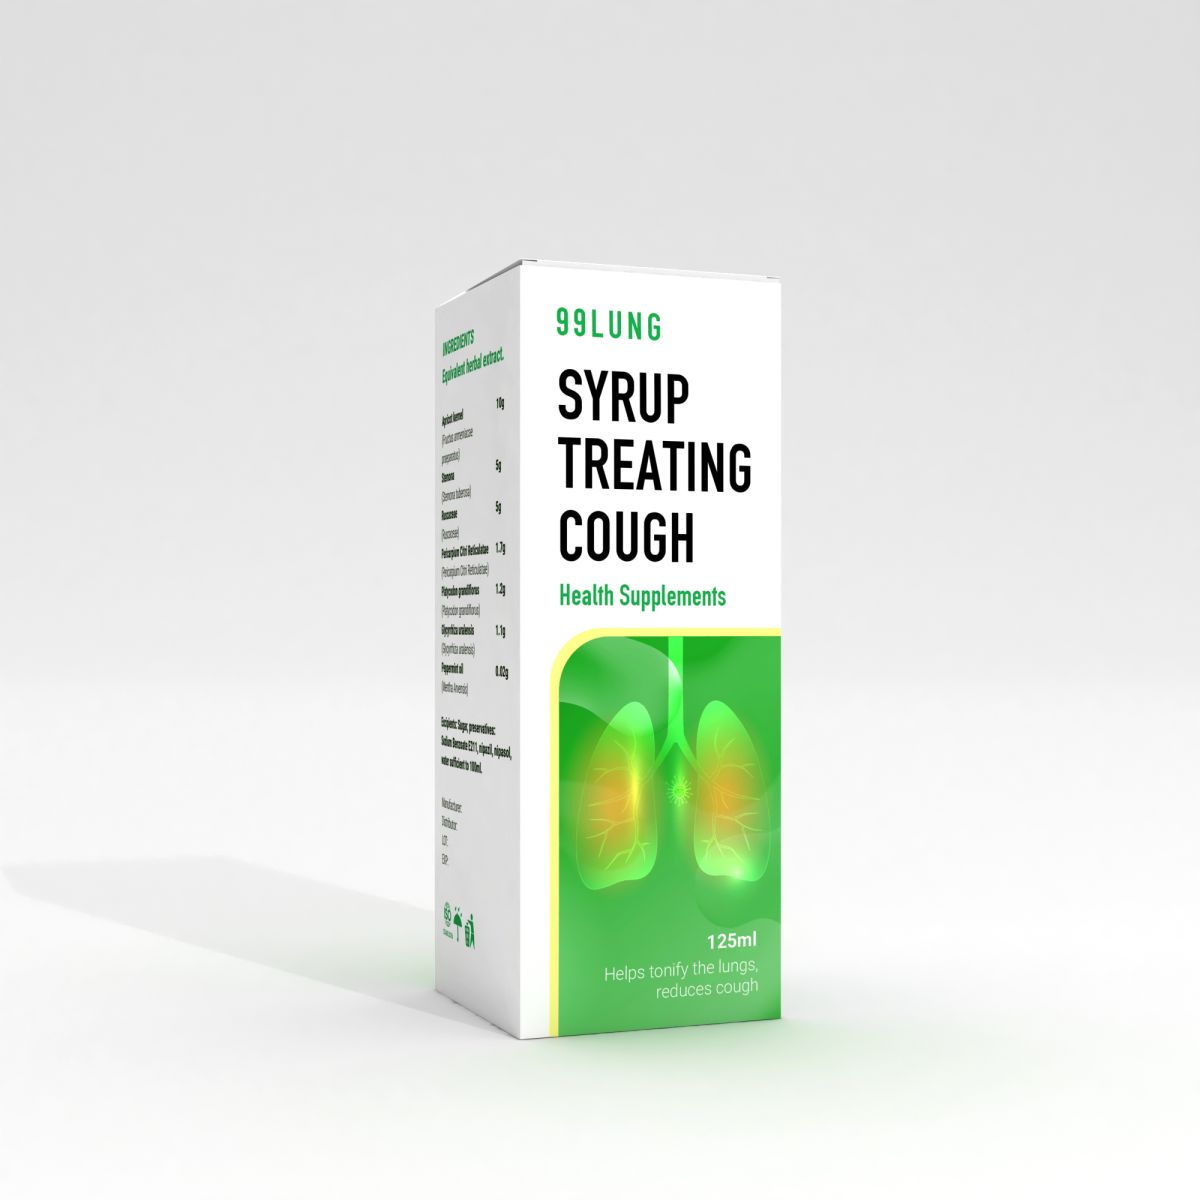 Syrub Treating Cough